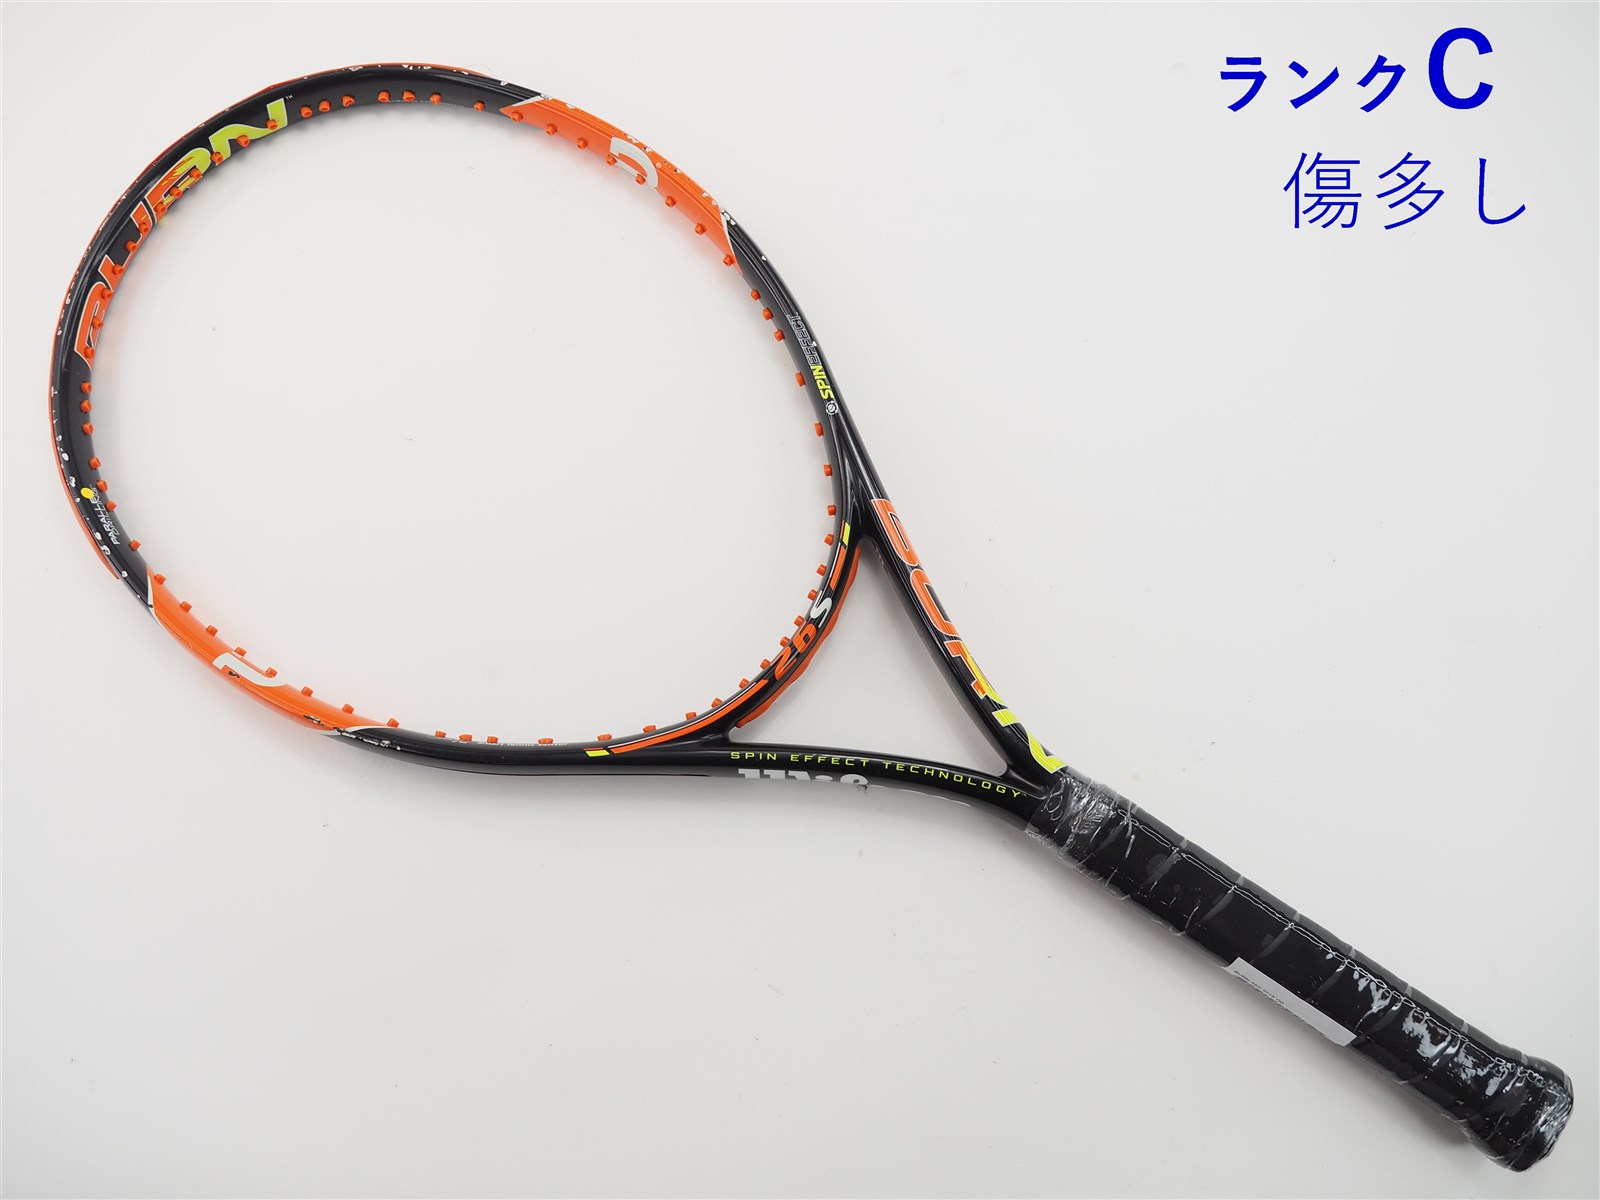 Wilson BURN 26S  ジュニア向け硬式テニスラケット